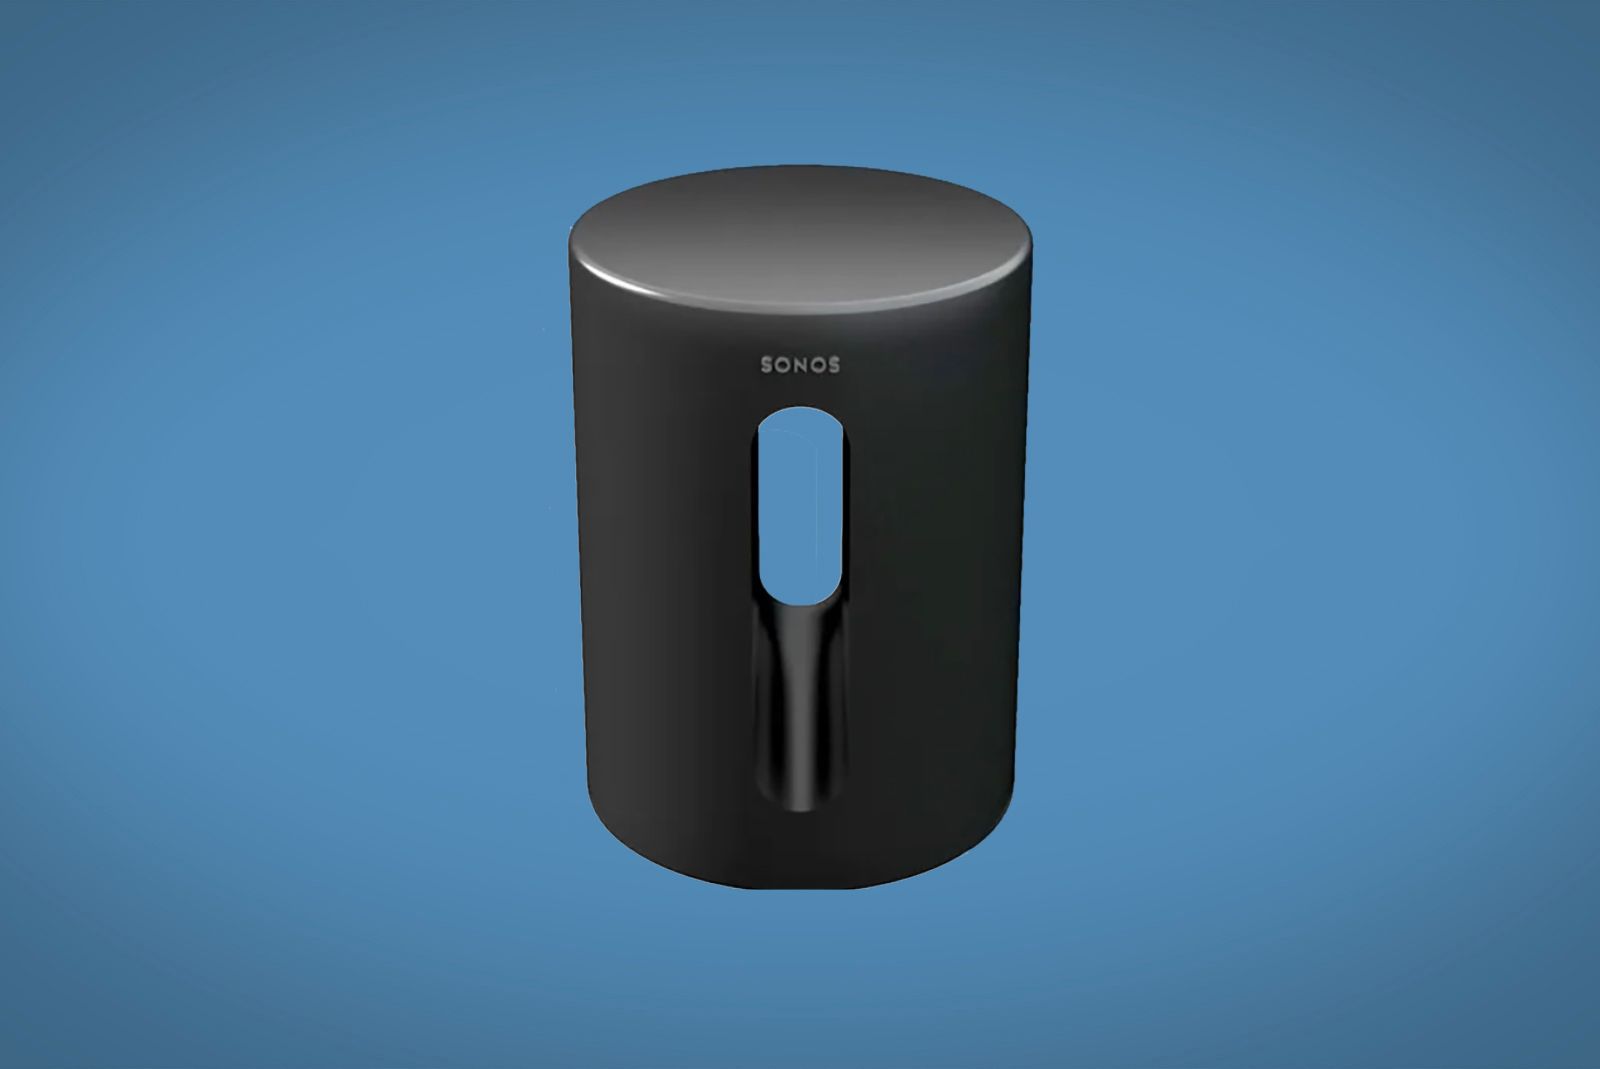 Sonos Sub Mini design revealed in leak: Is a launch imminent? photo 1